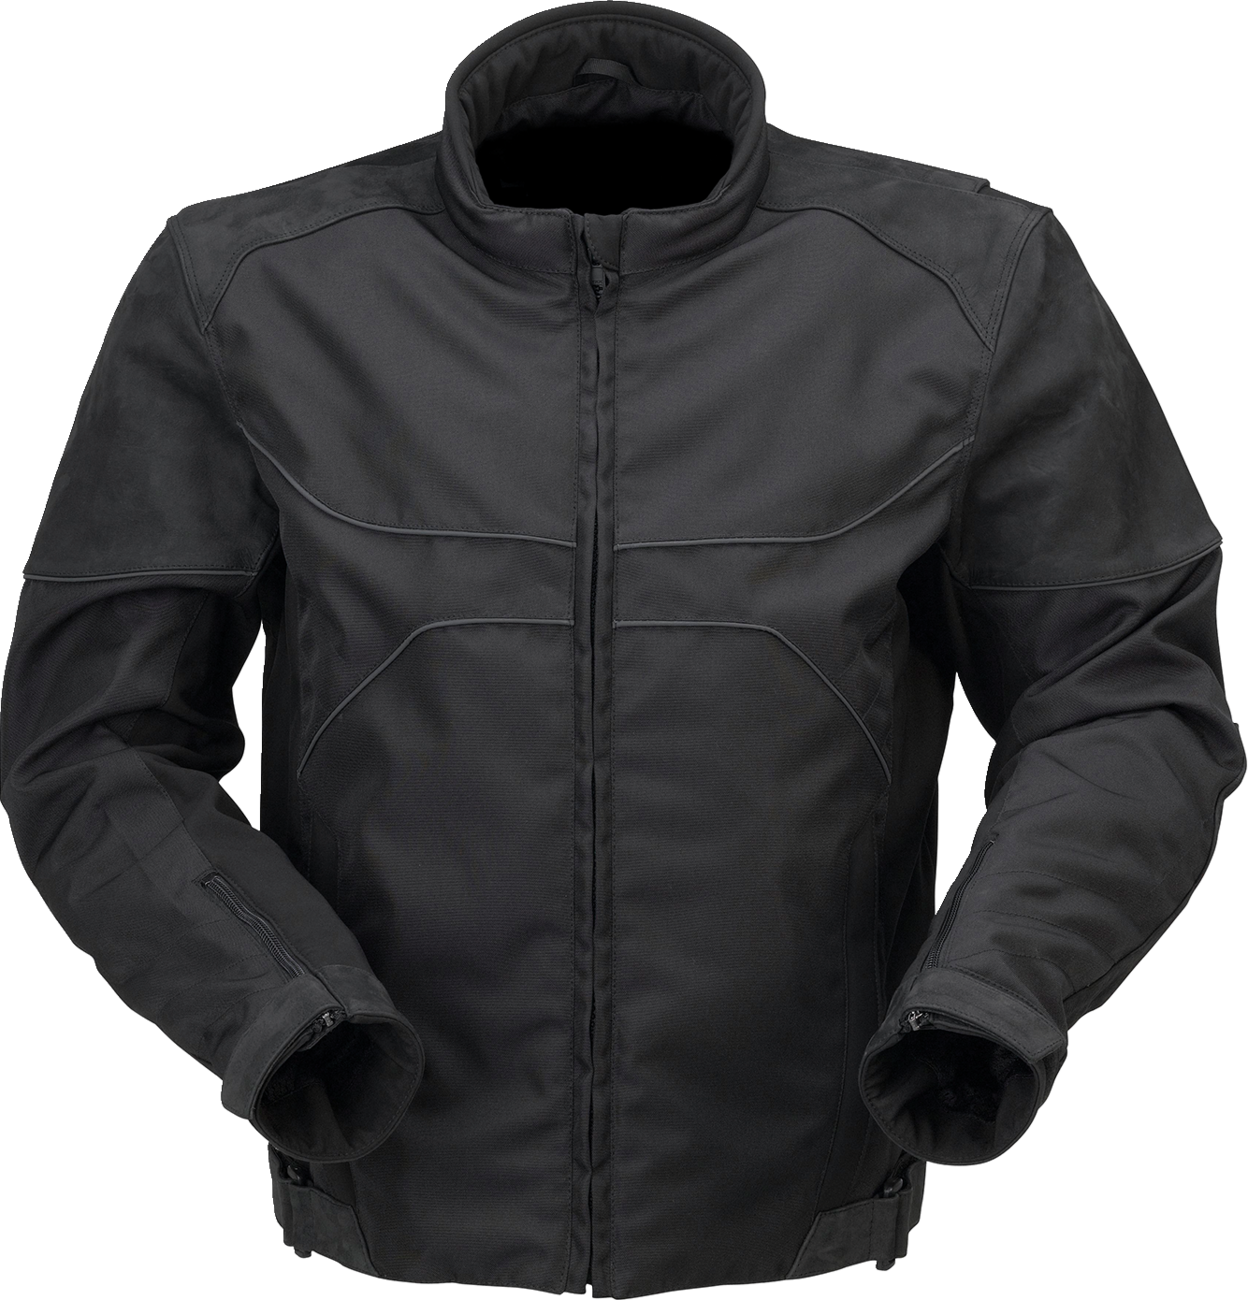 Z1R Reverance Jacket - Black - 4XL 2820-5789